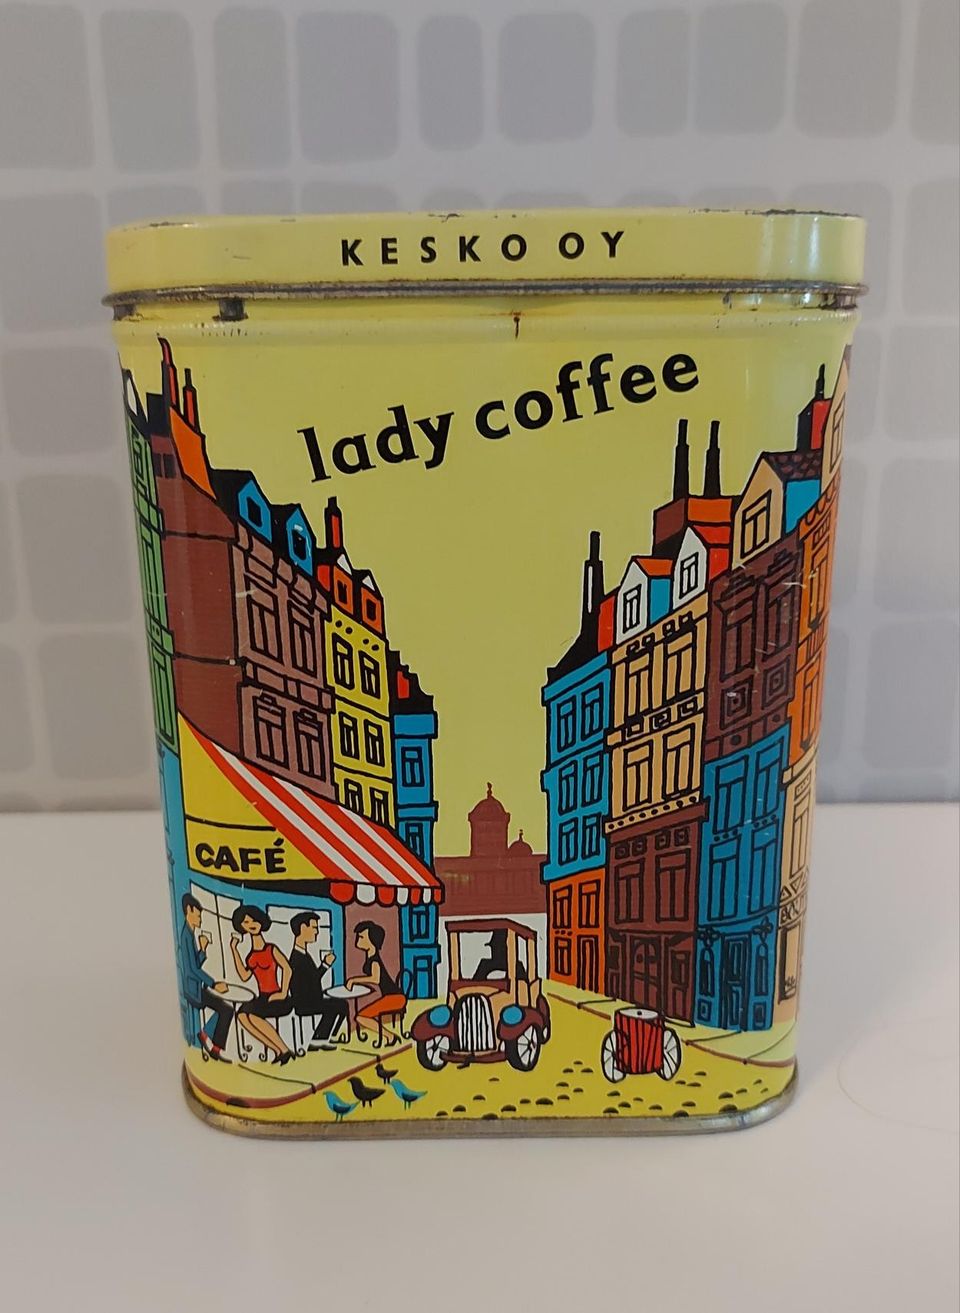 Kesko Oy lady coffee peltipurkki